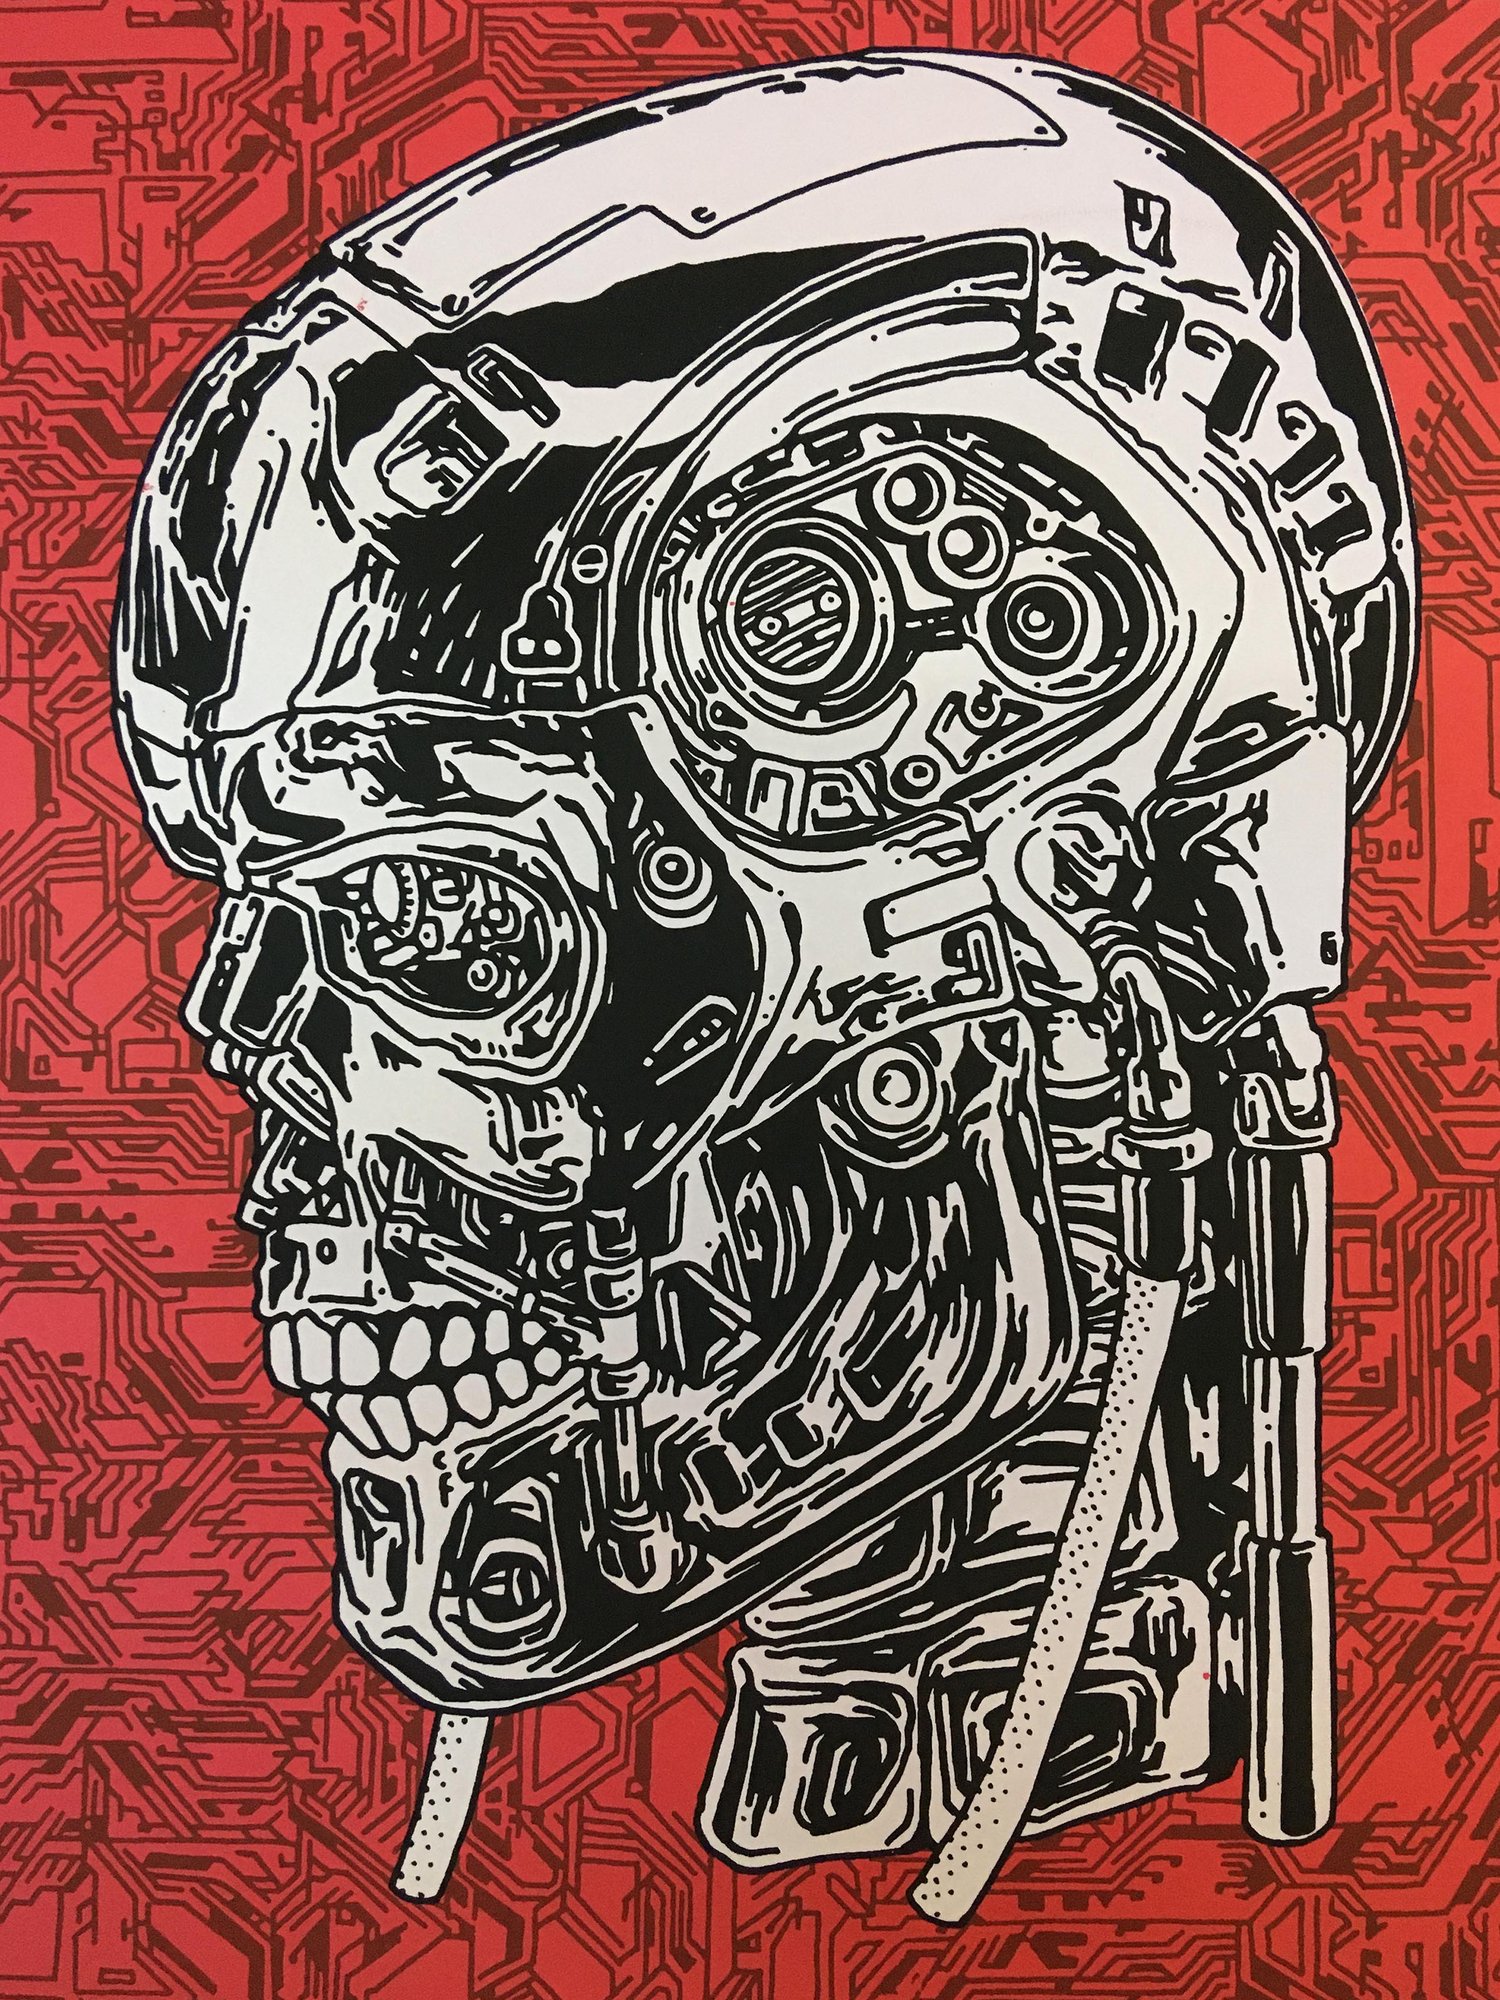 Image of Terminator poster